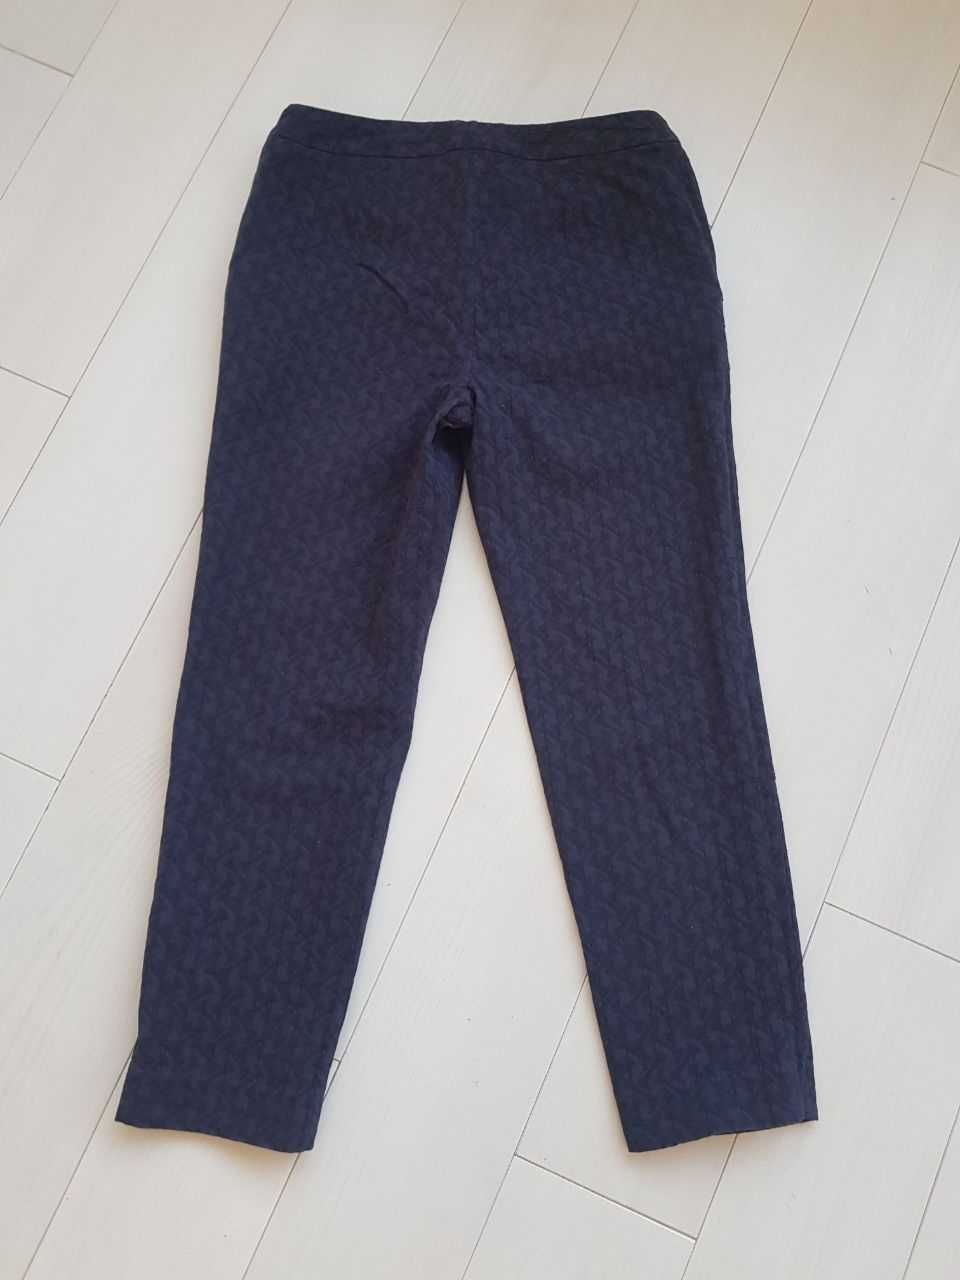 Женские летние брюки,  штаны M&S . Размер S, uk 8